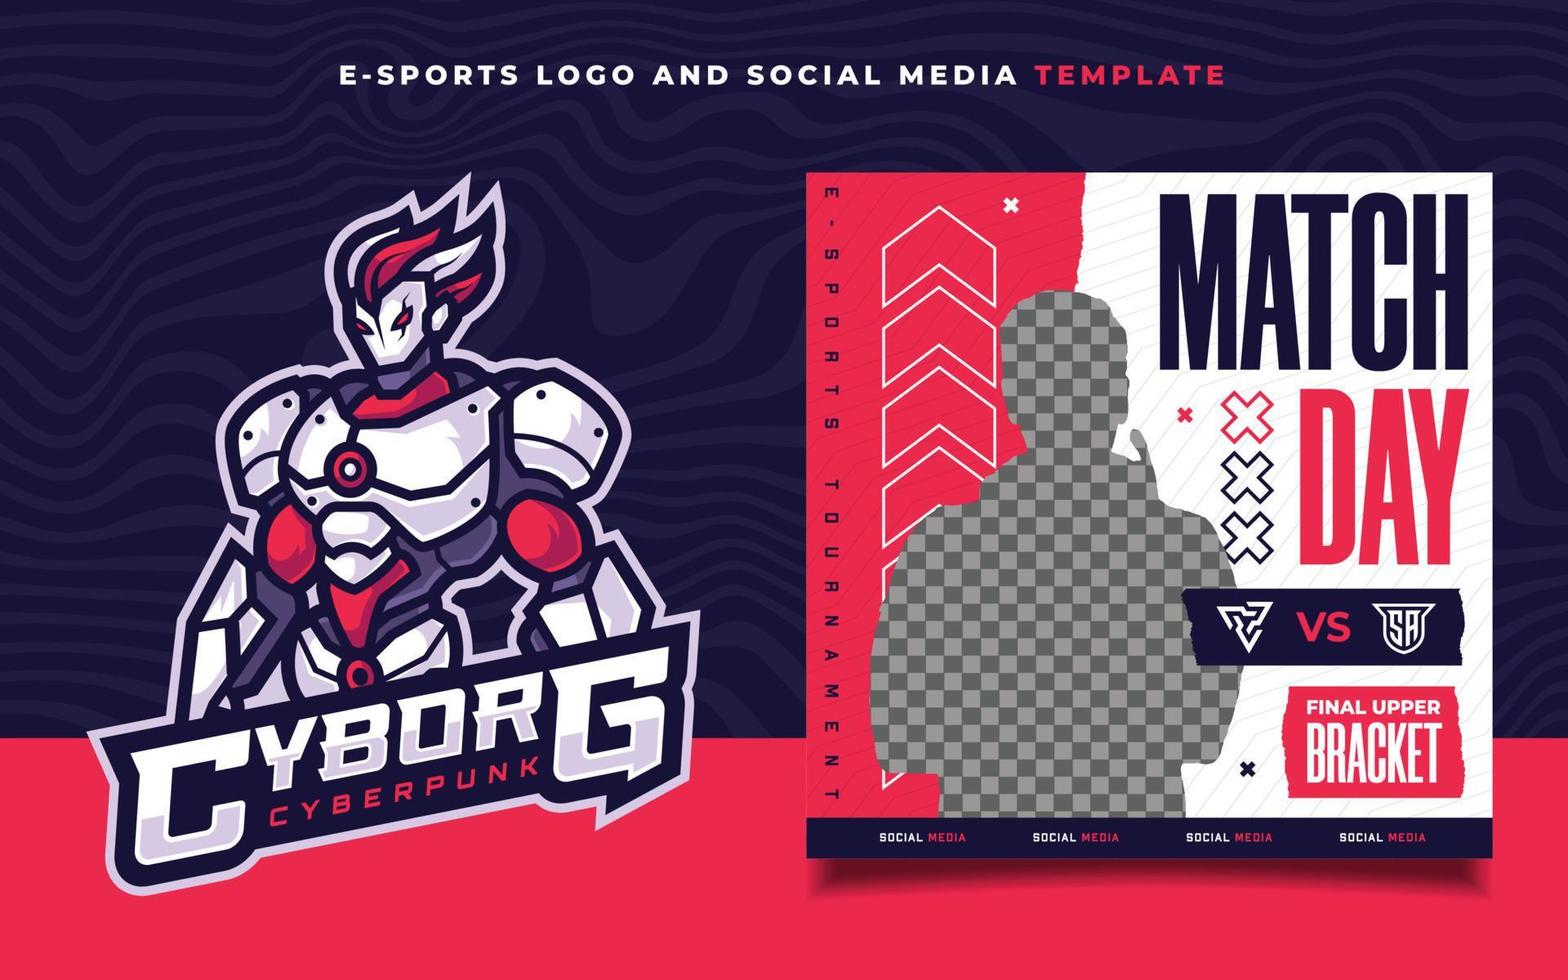 reeks van e-sport gaming folder sjabloon voor sociaal media banier met cyborg karakter mascotte logo vector